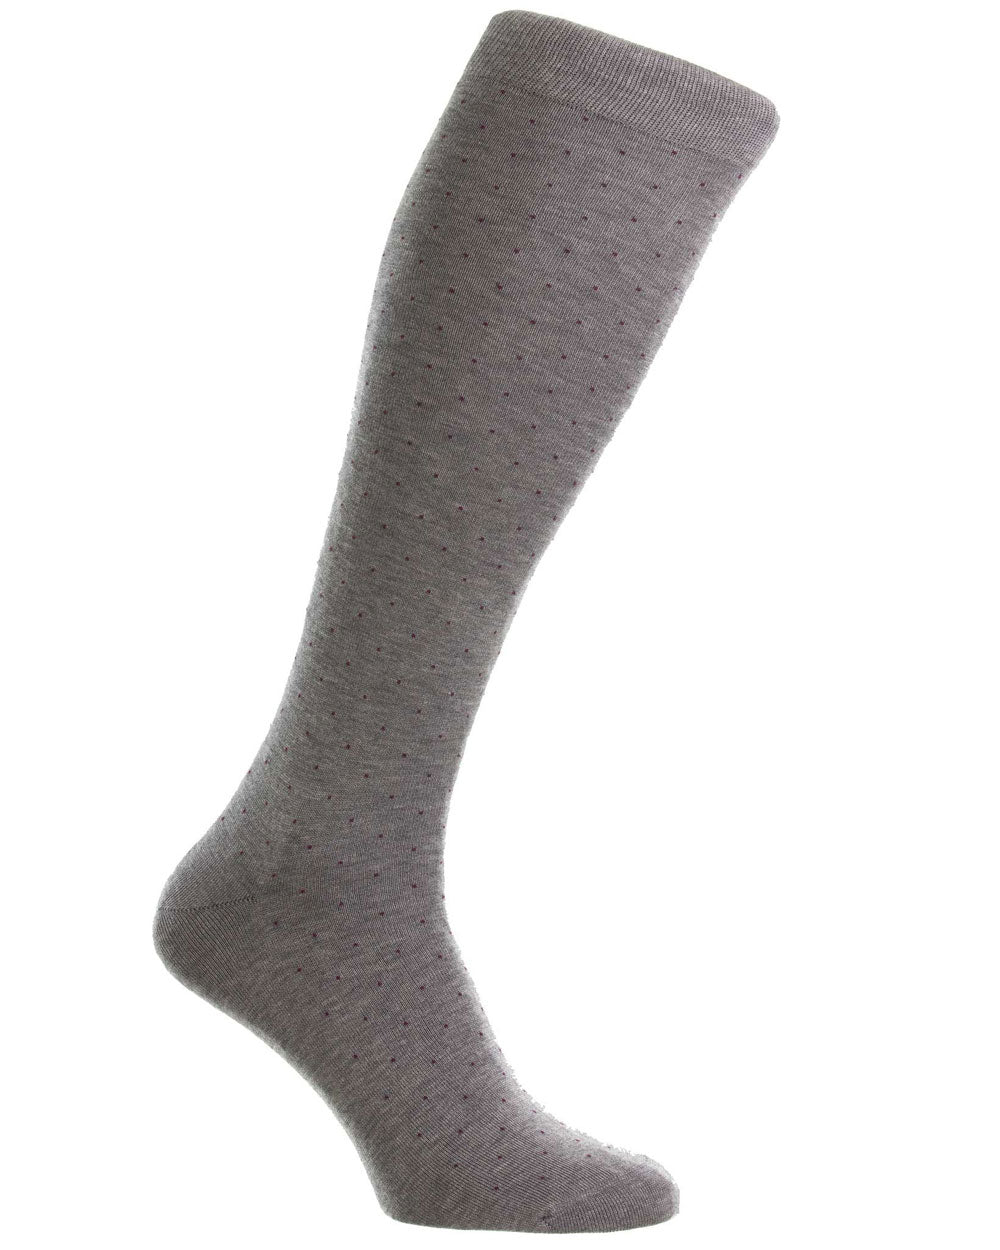 Pin Dot Over the Calf Socks in Mid Grey